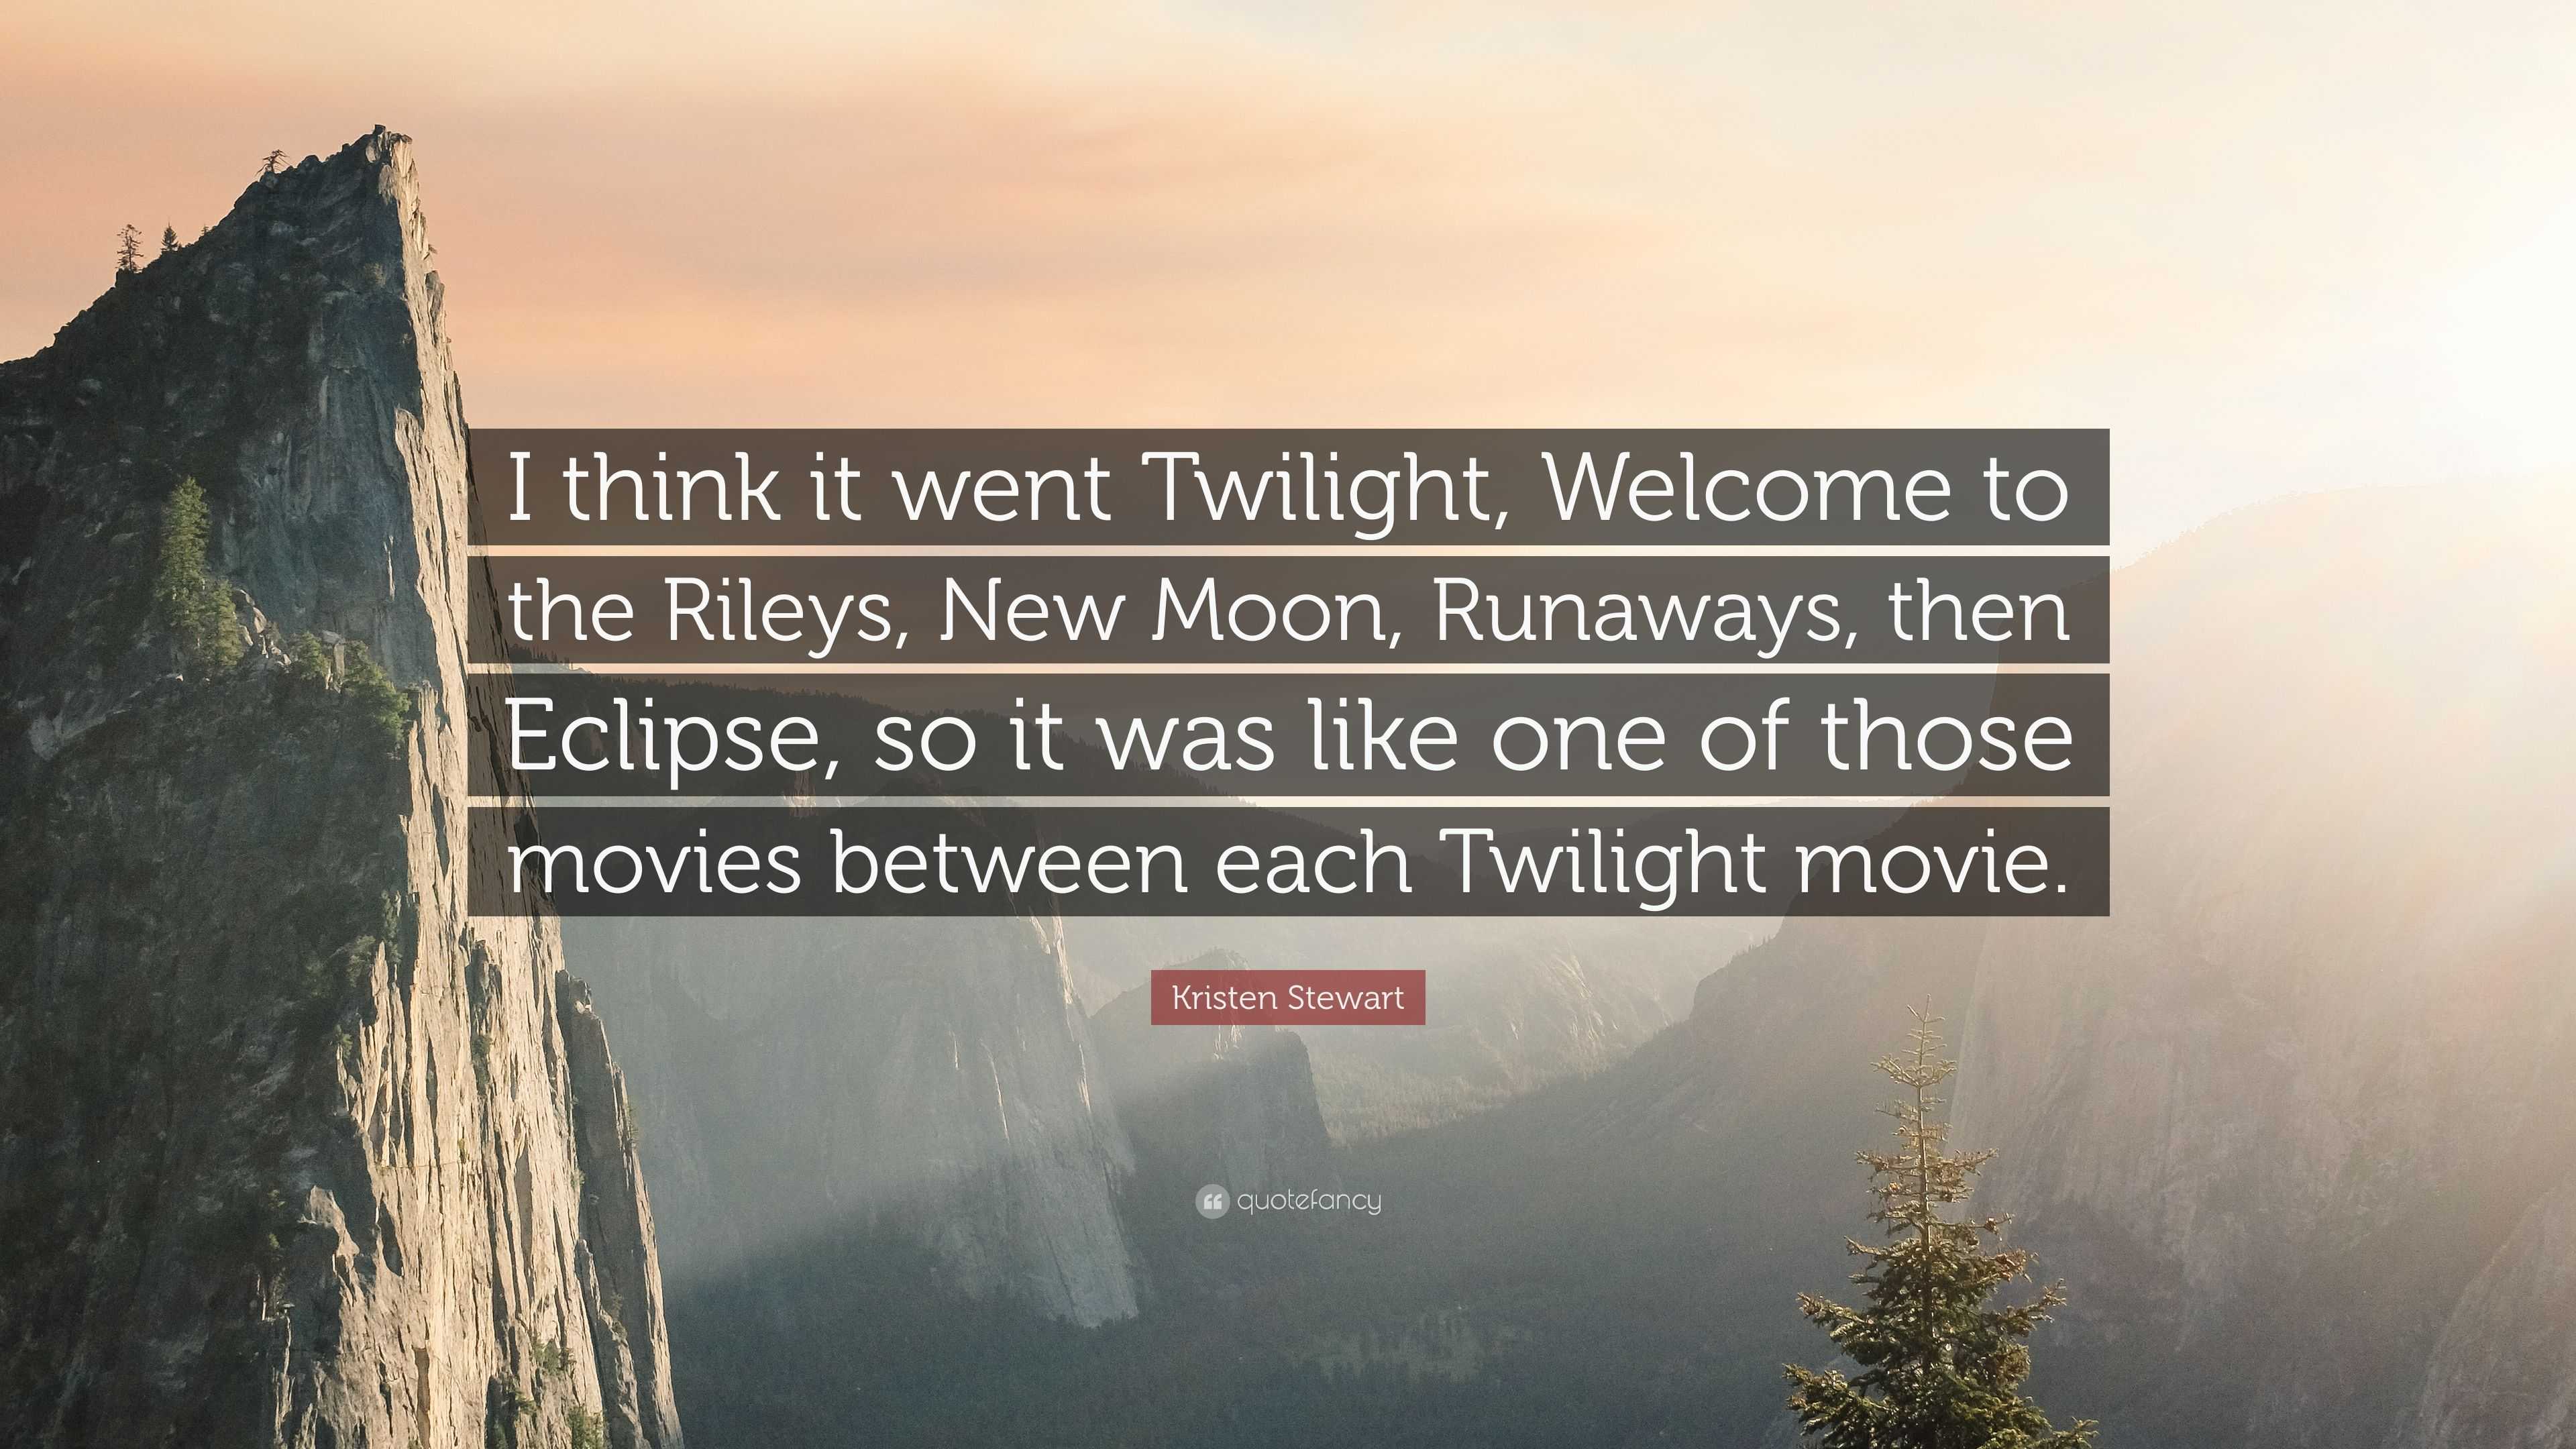 Kristen Stewart Quote “I think it went Twilight, to the Rileys